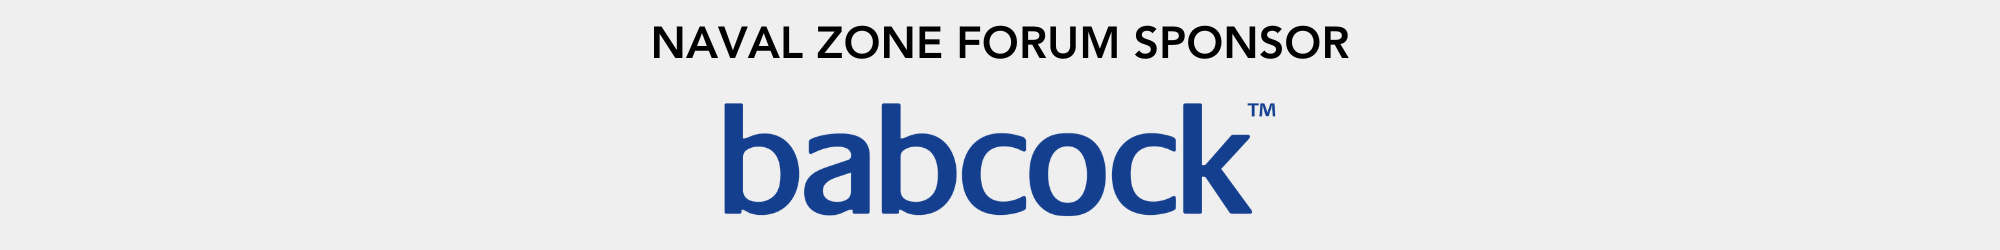 Babcock is the Naval Zone Forum Sponsor